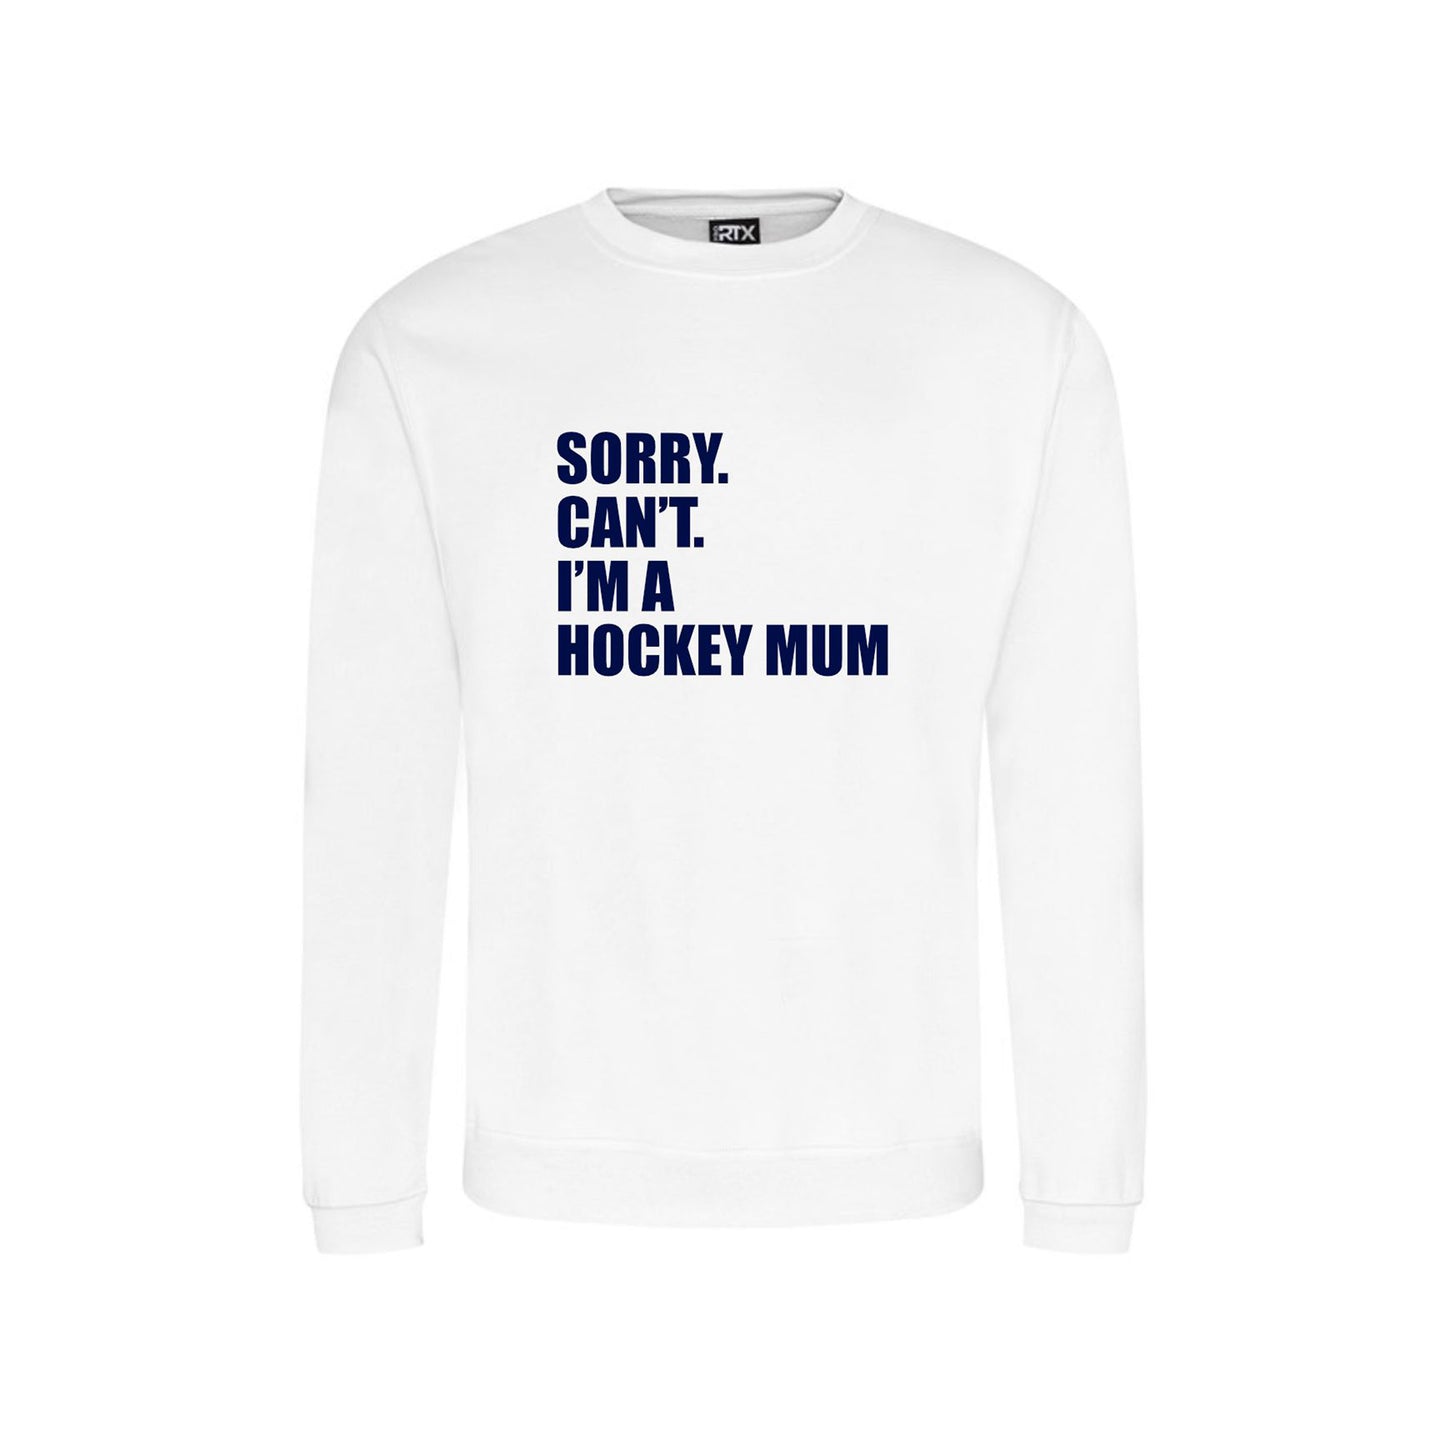 Sorry. Can't. I'm A Hockey Mum. Sweatshirt